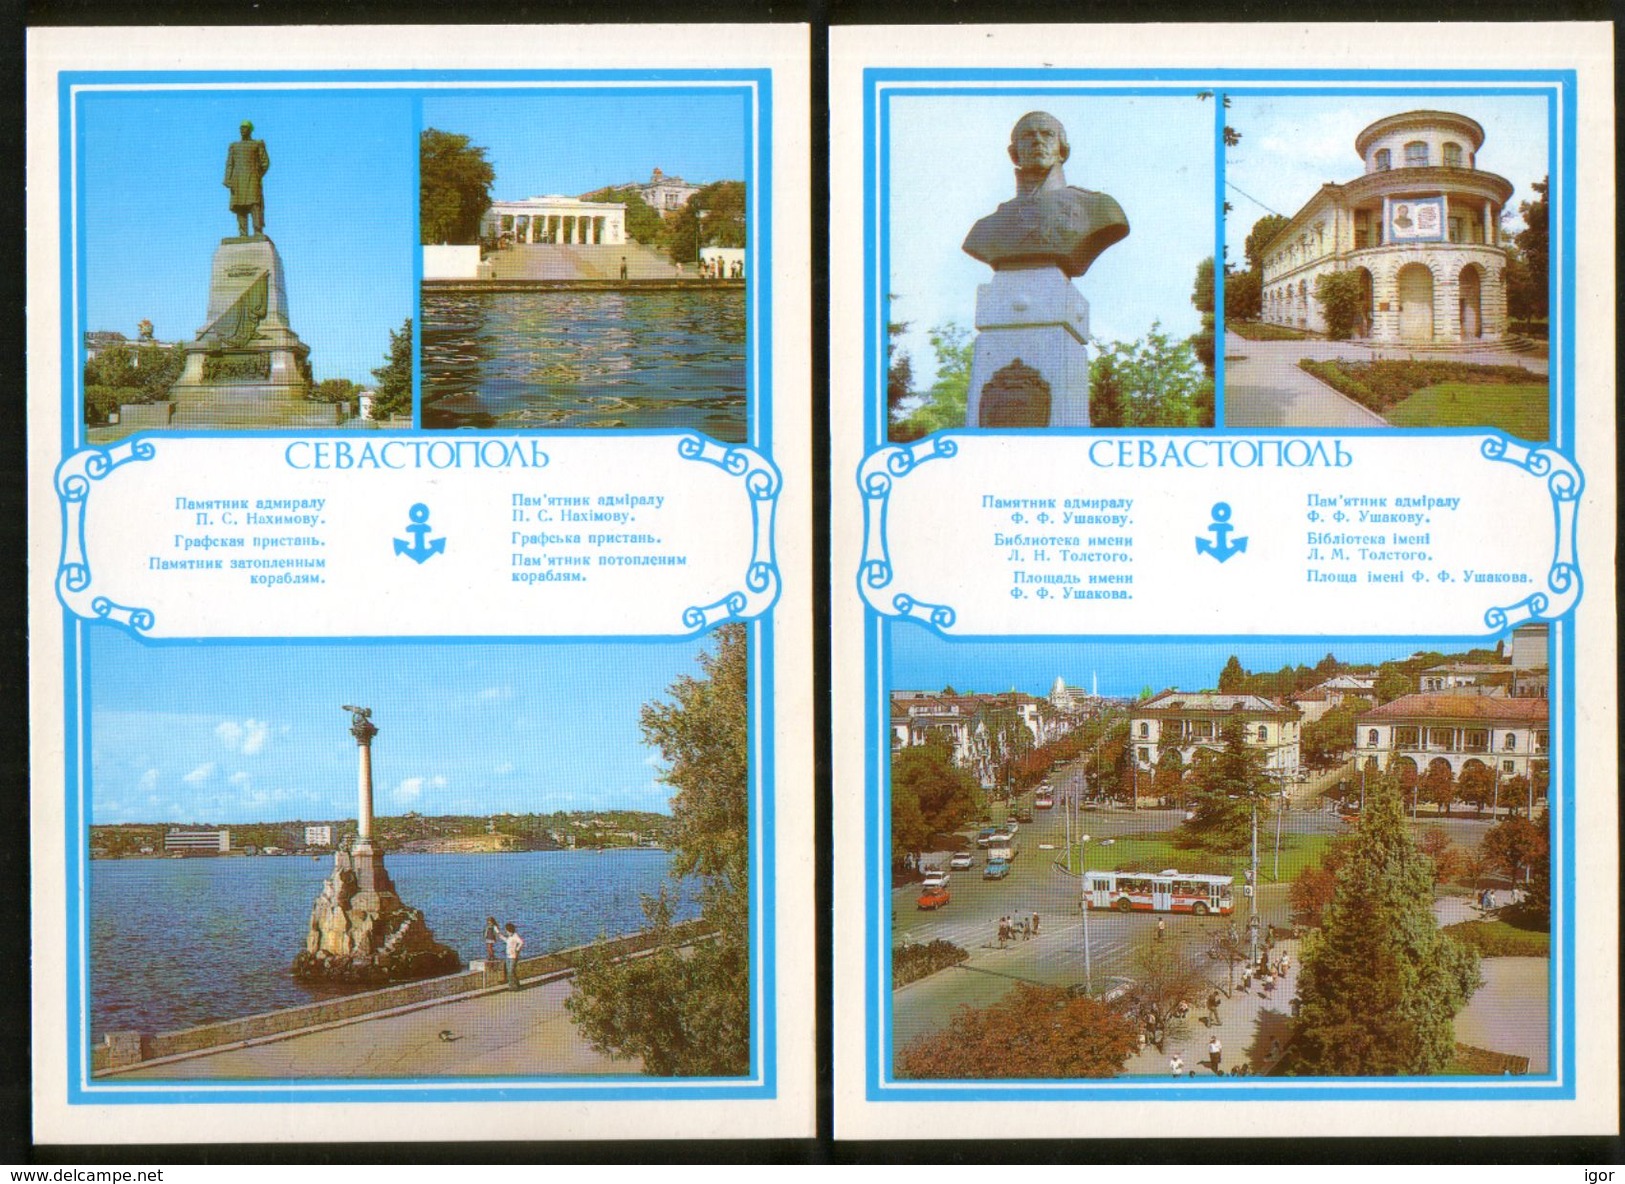 USSR Ukraine Crimea Sevastopol Stationery Postcards 1988, Set Of 10 PC - 1980-91